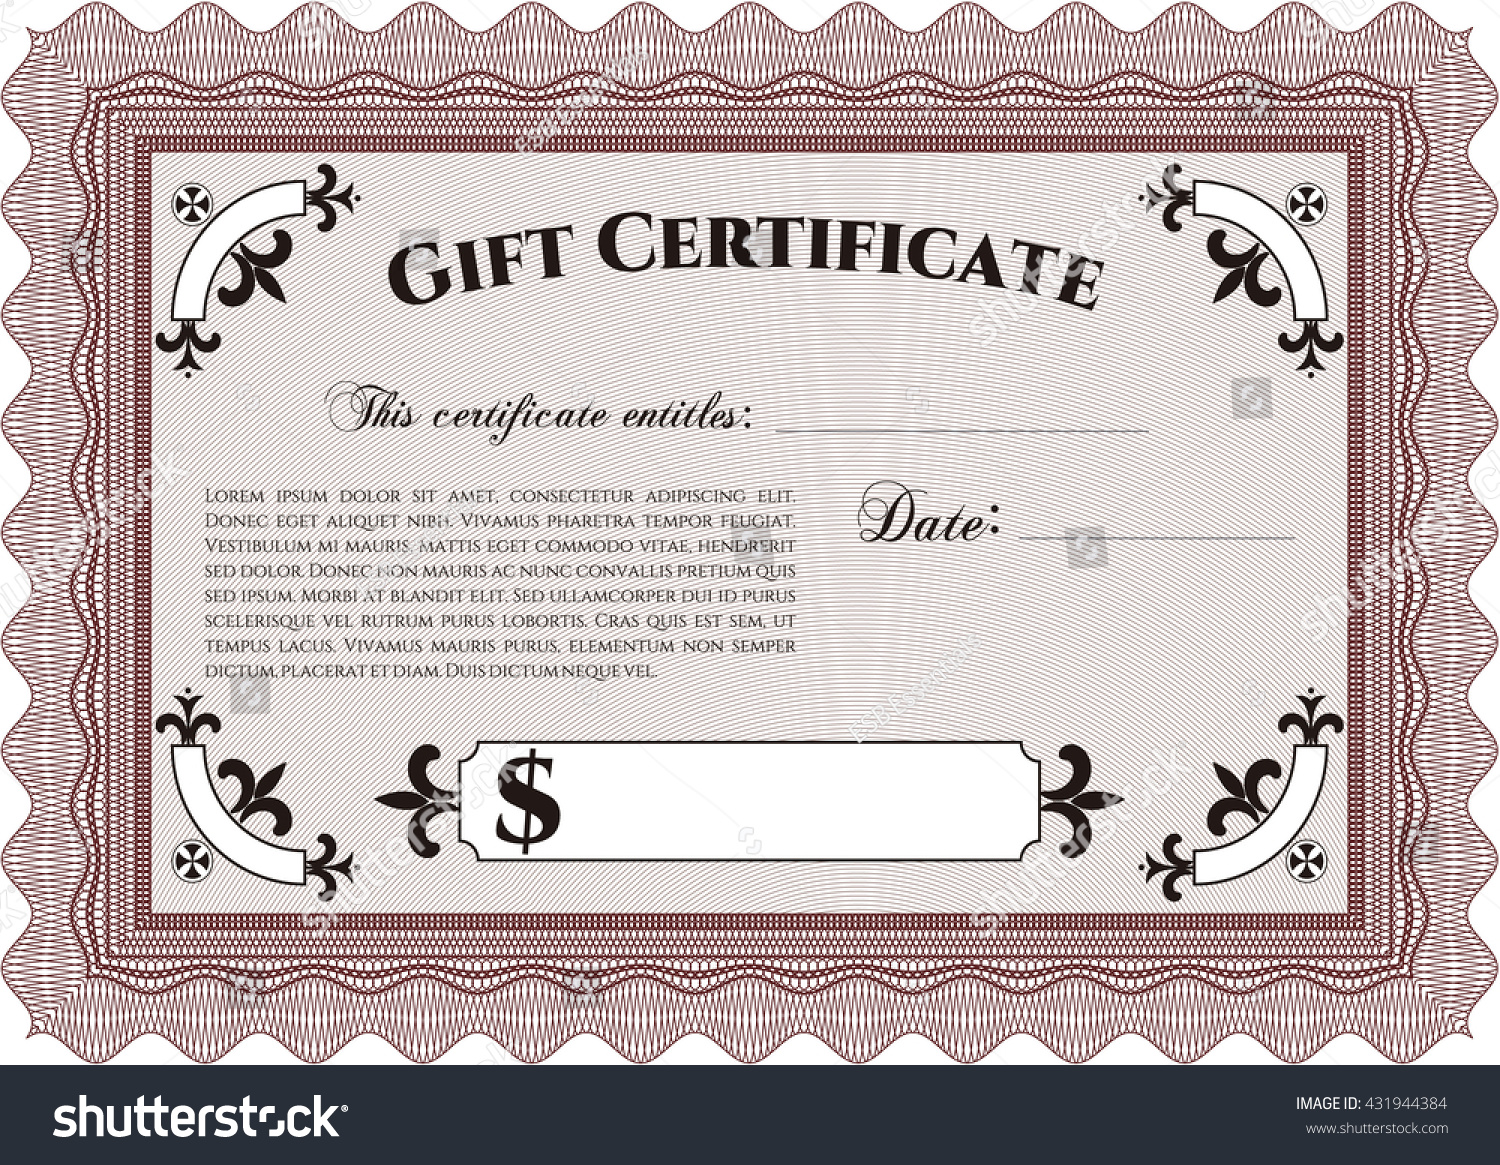 Formal Gift Certificate Border Frame Quality: стоковая векторная графика (б...